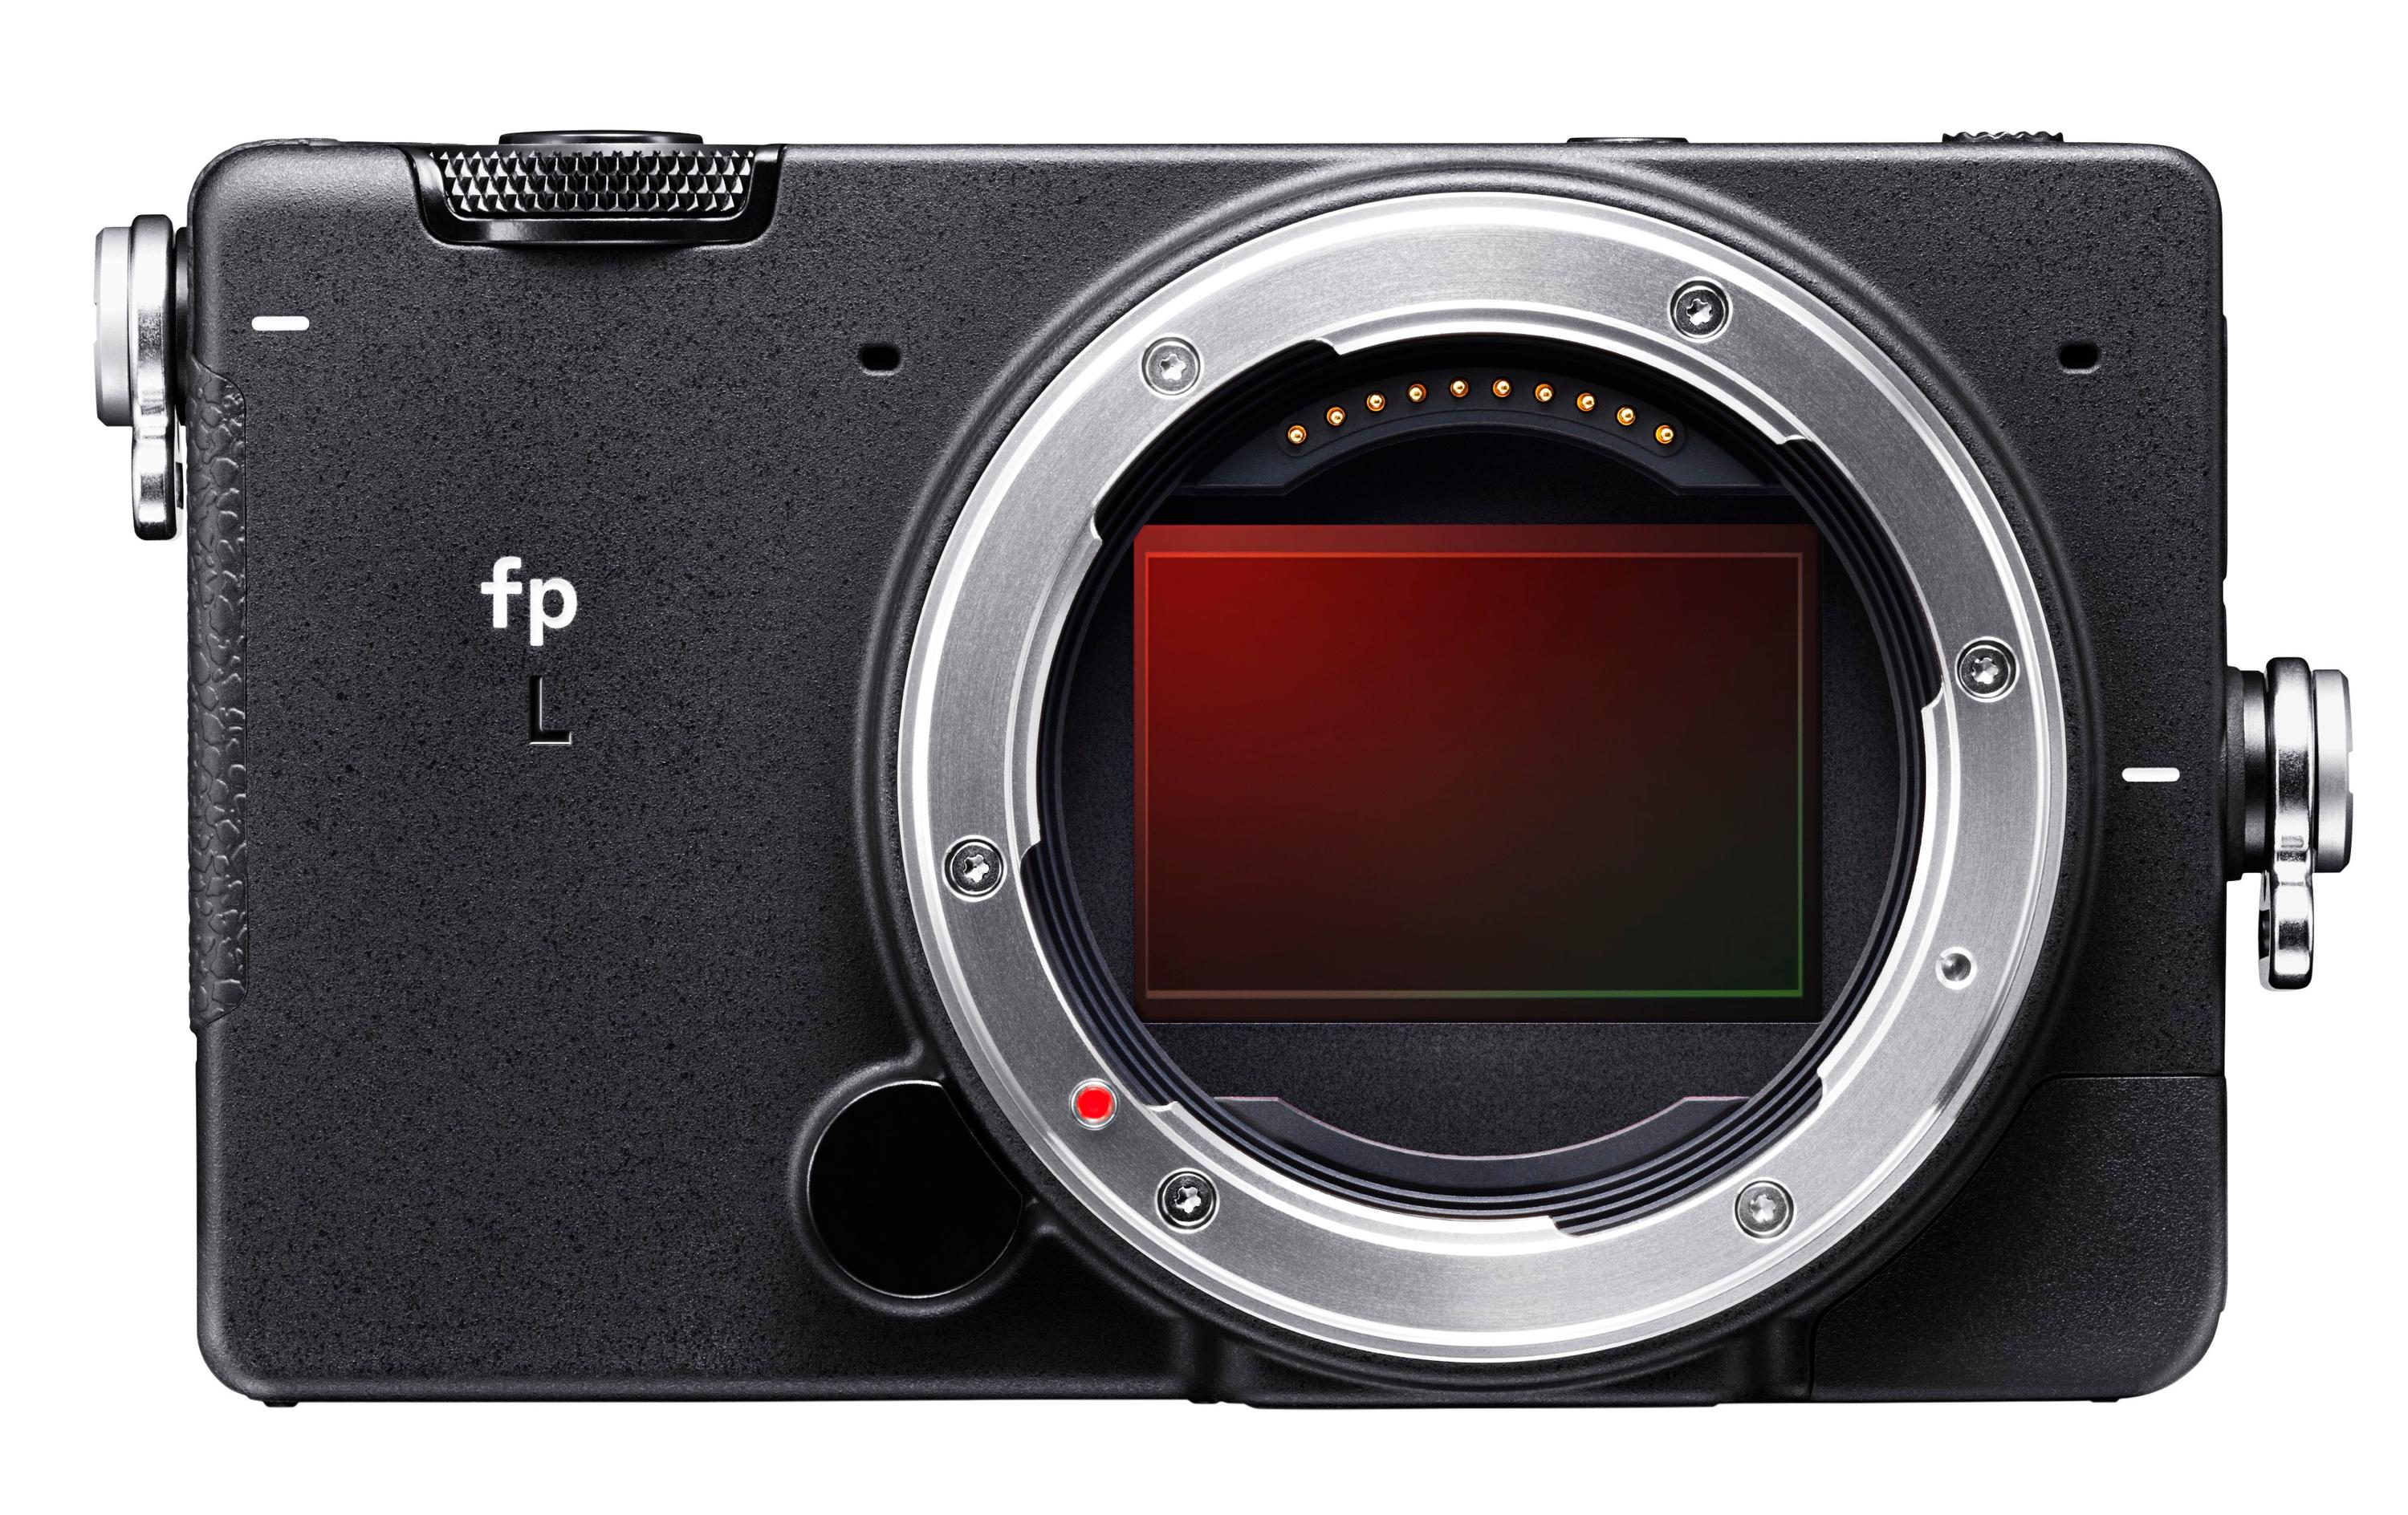 Sigma Fotokamera fp L + EVF